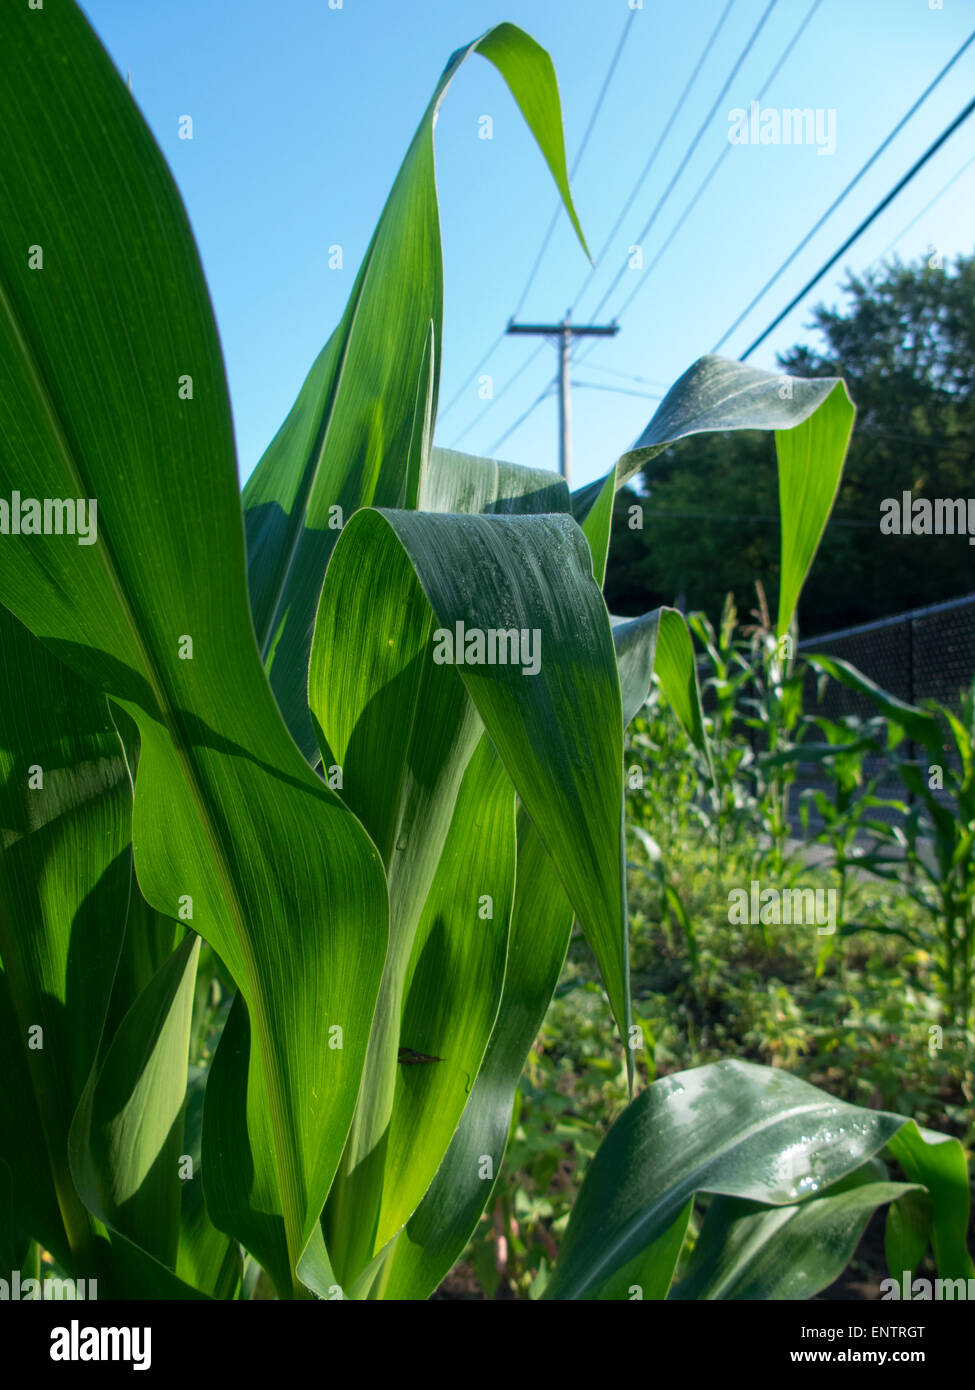 Corn stalks at the Manton Bend Community Garden in Providence, Rhode Island Stock Photo